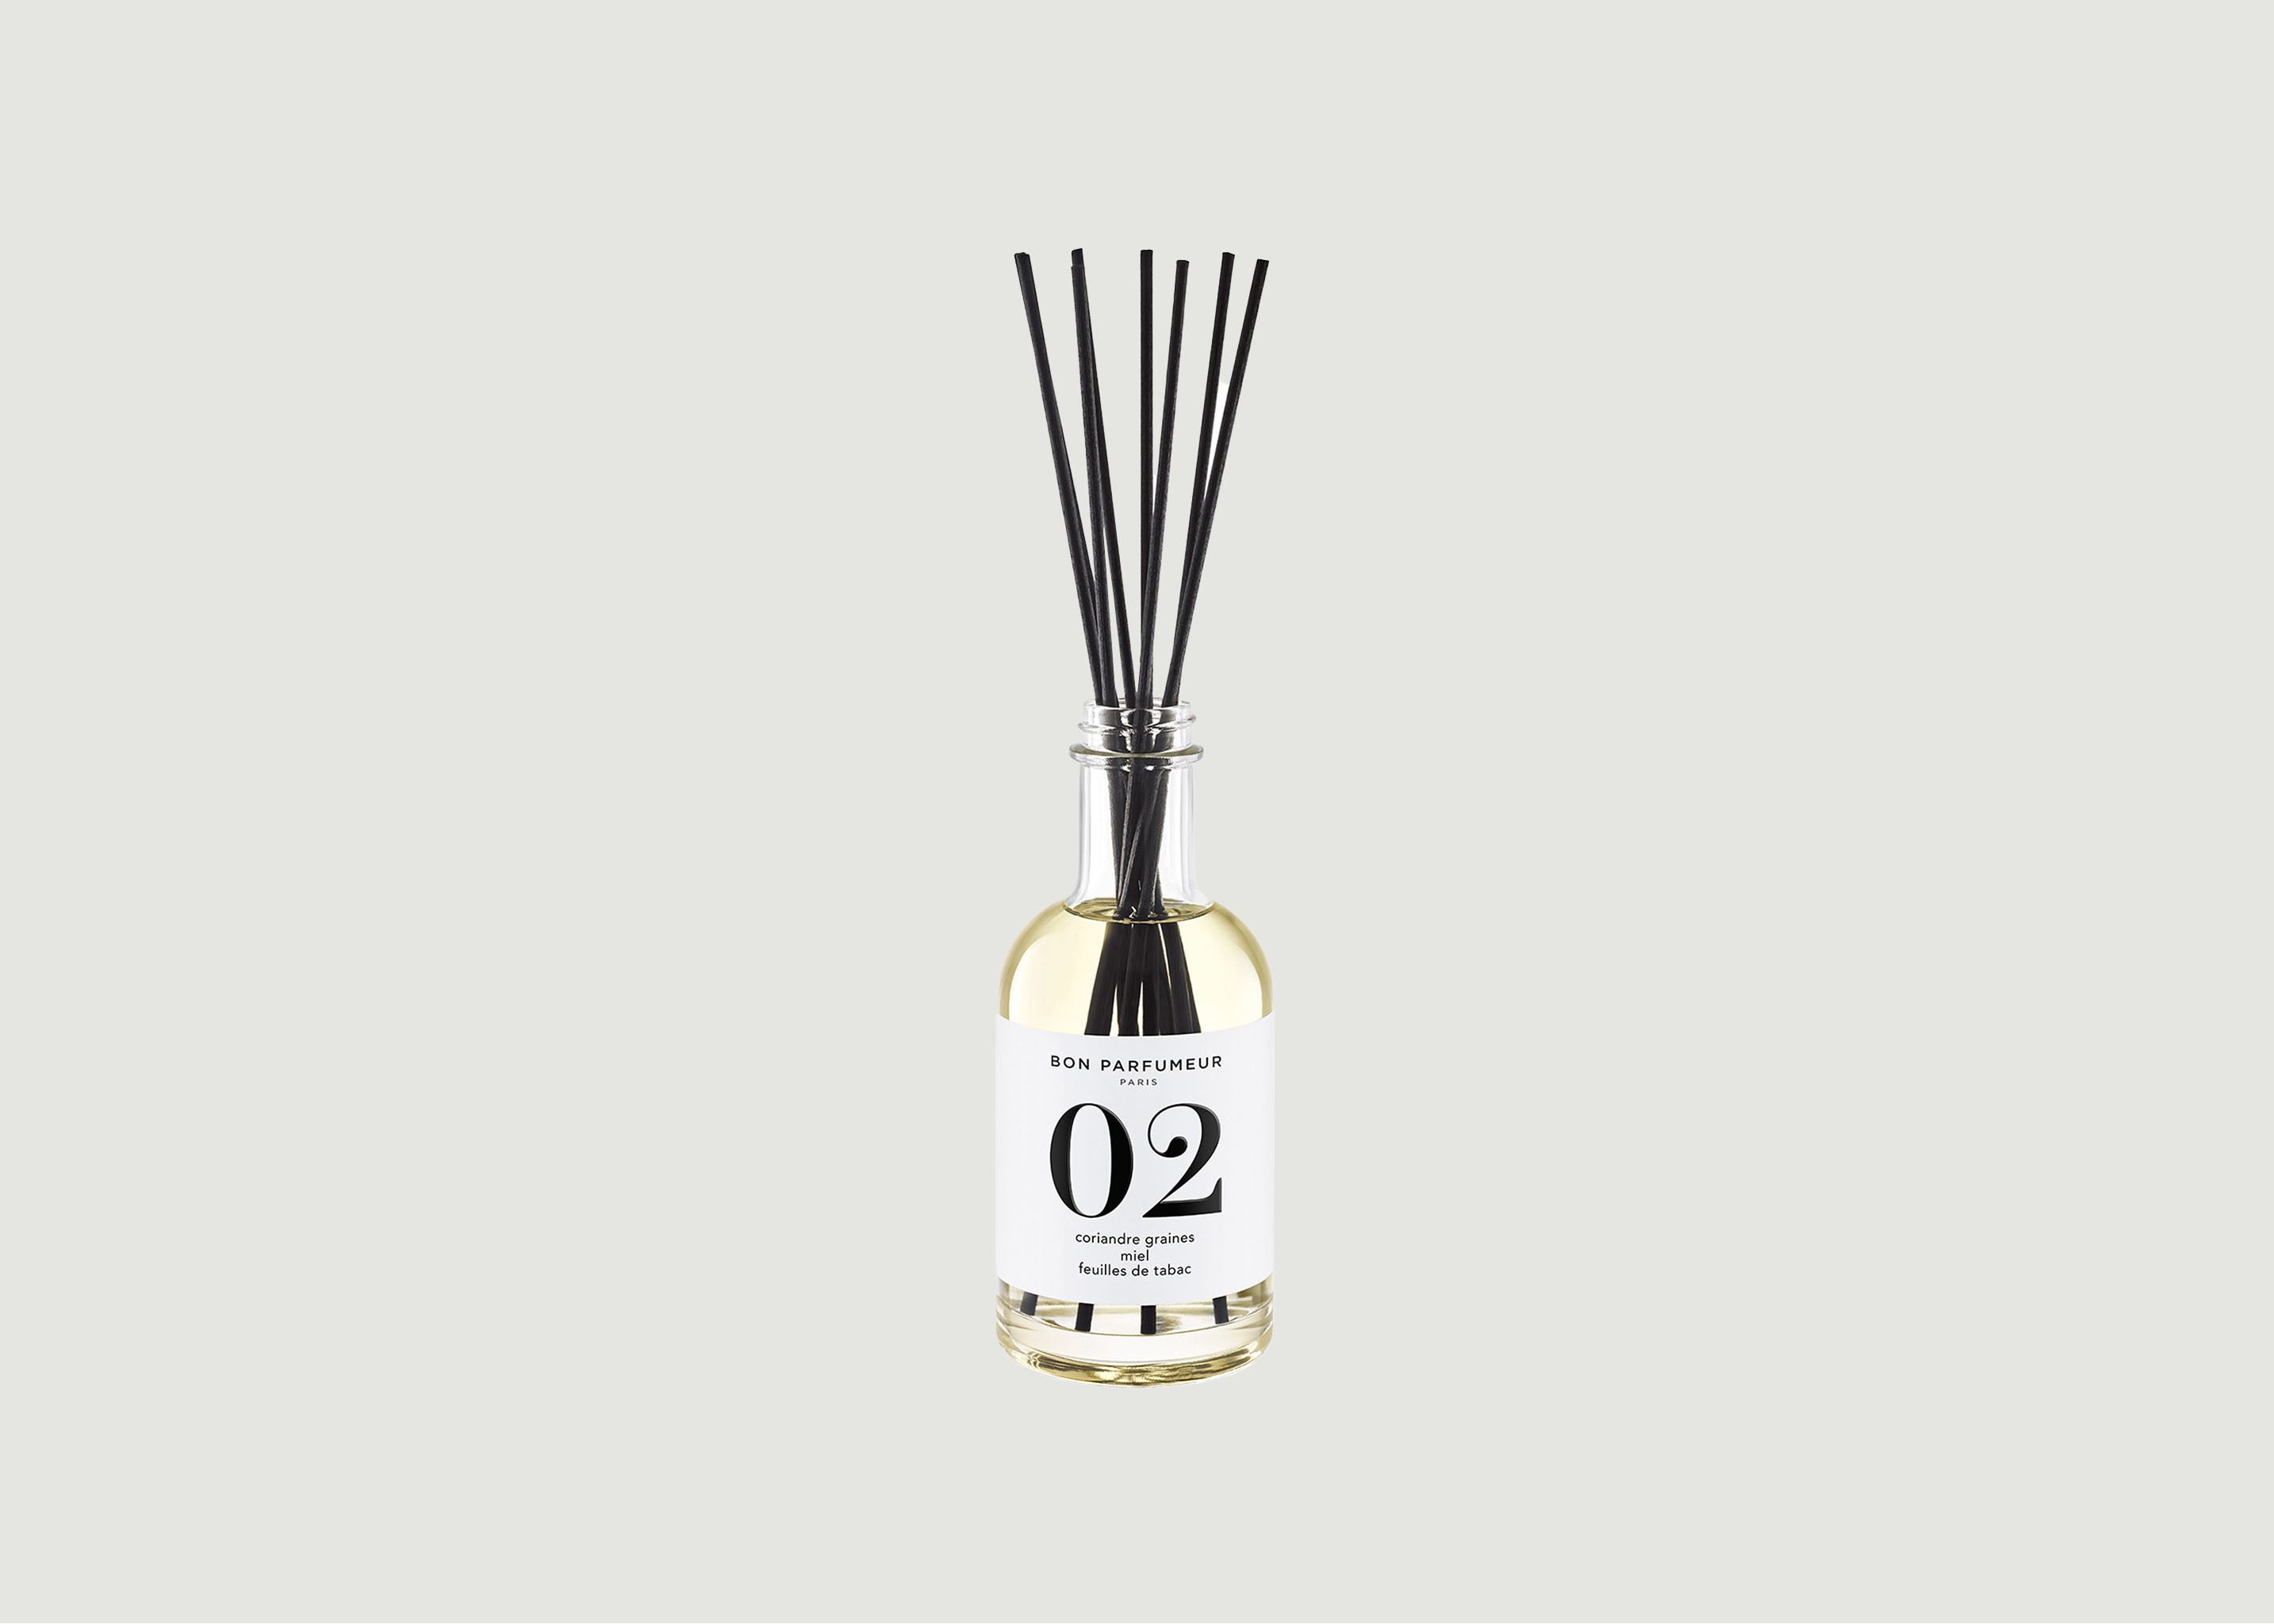 Home Fragrance Diffuser 02 : Coriander seeds, Honey and Tobacco leaves - Bon Parfumeur